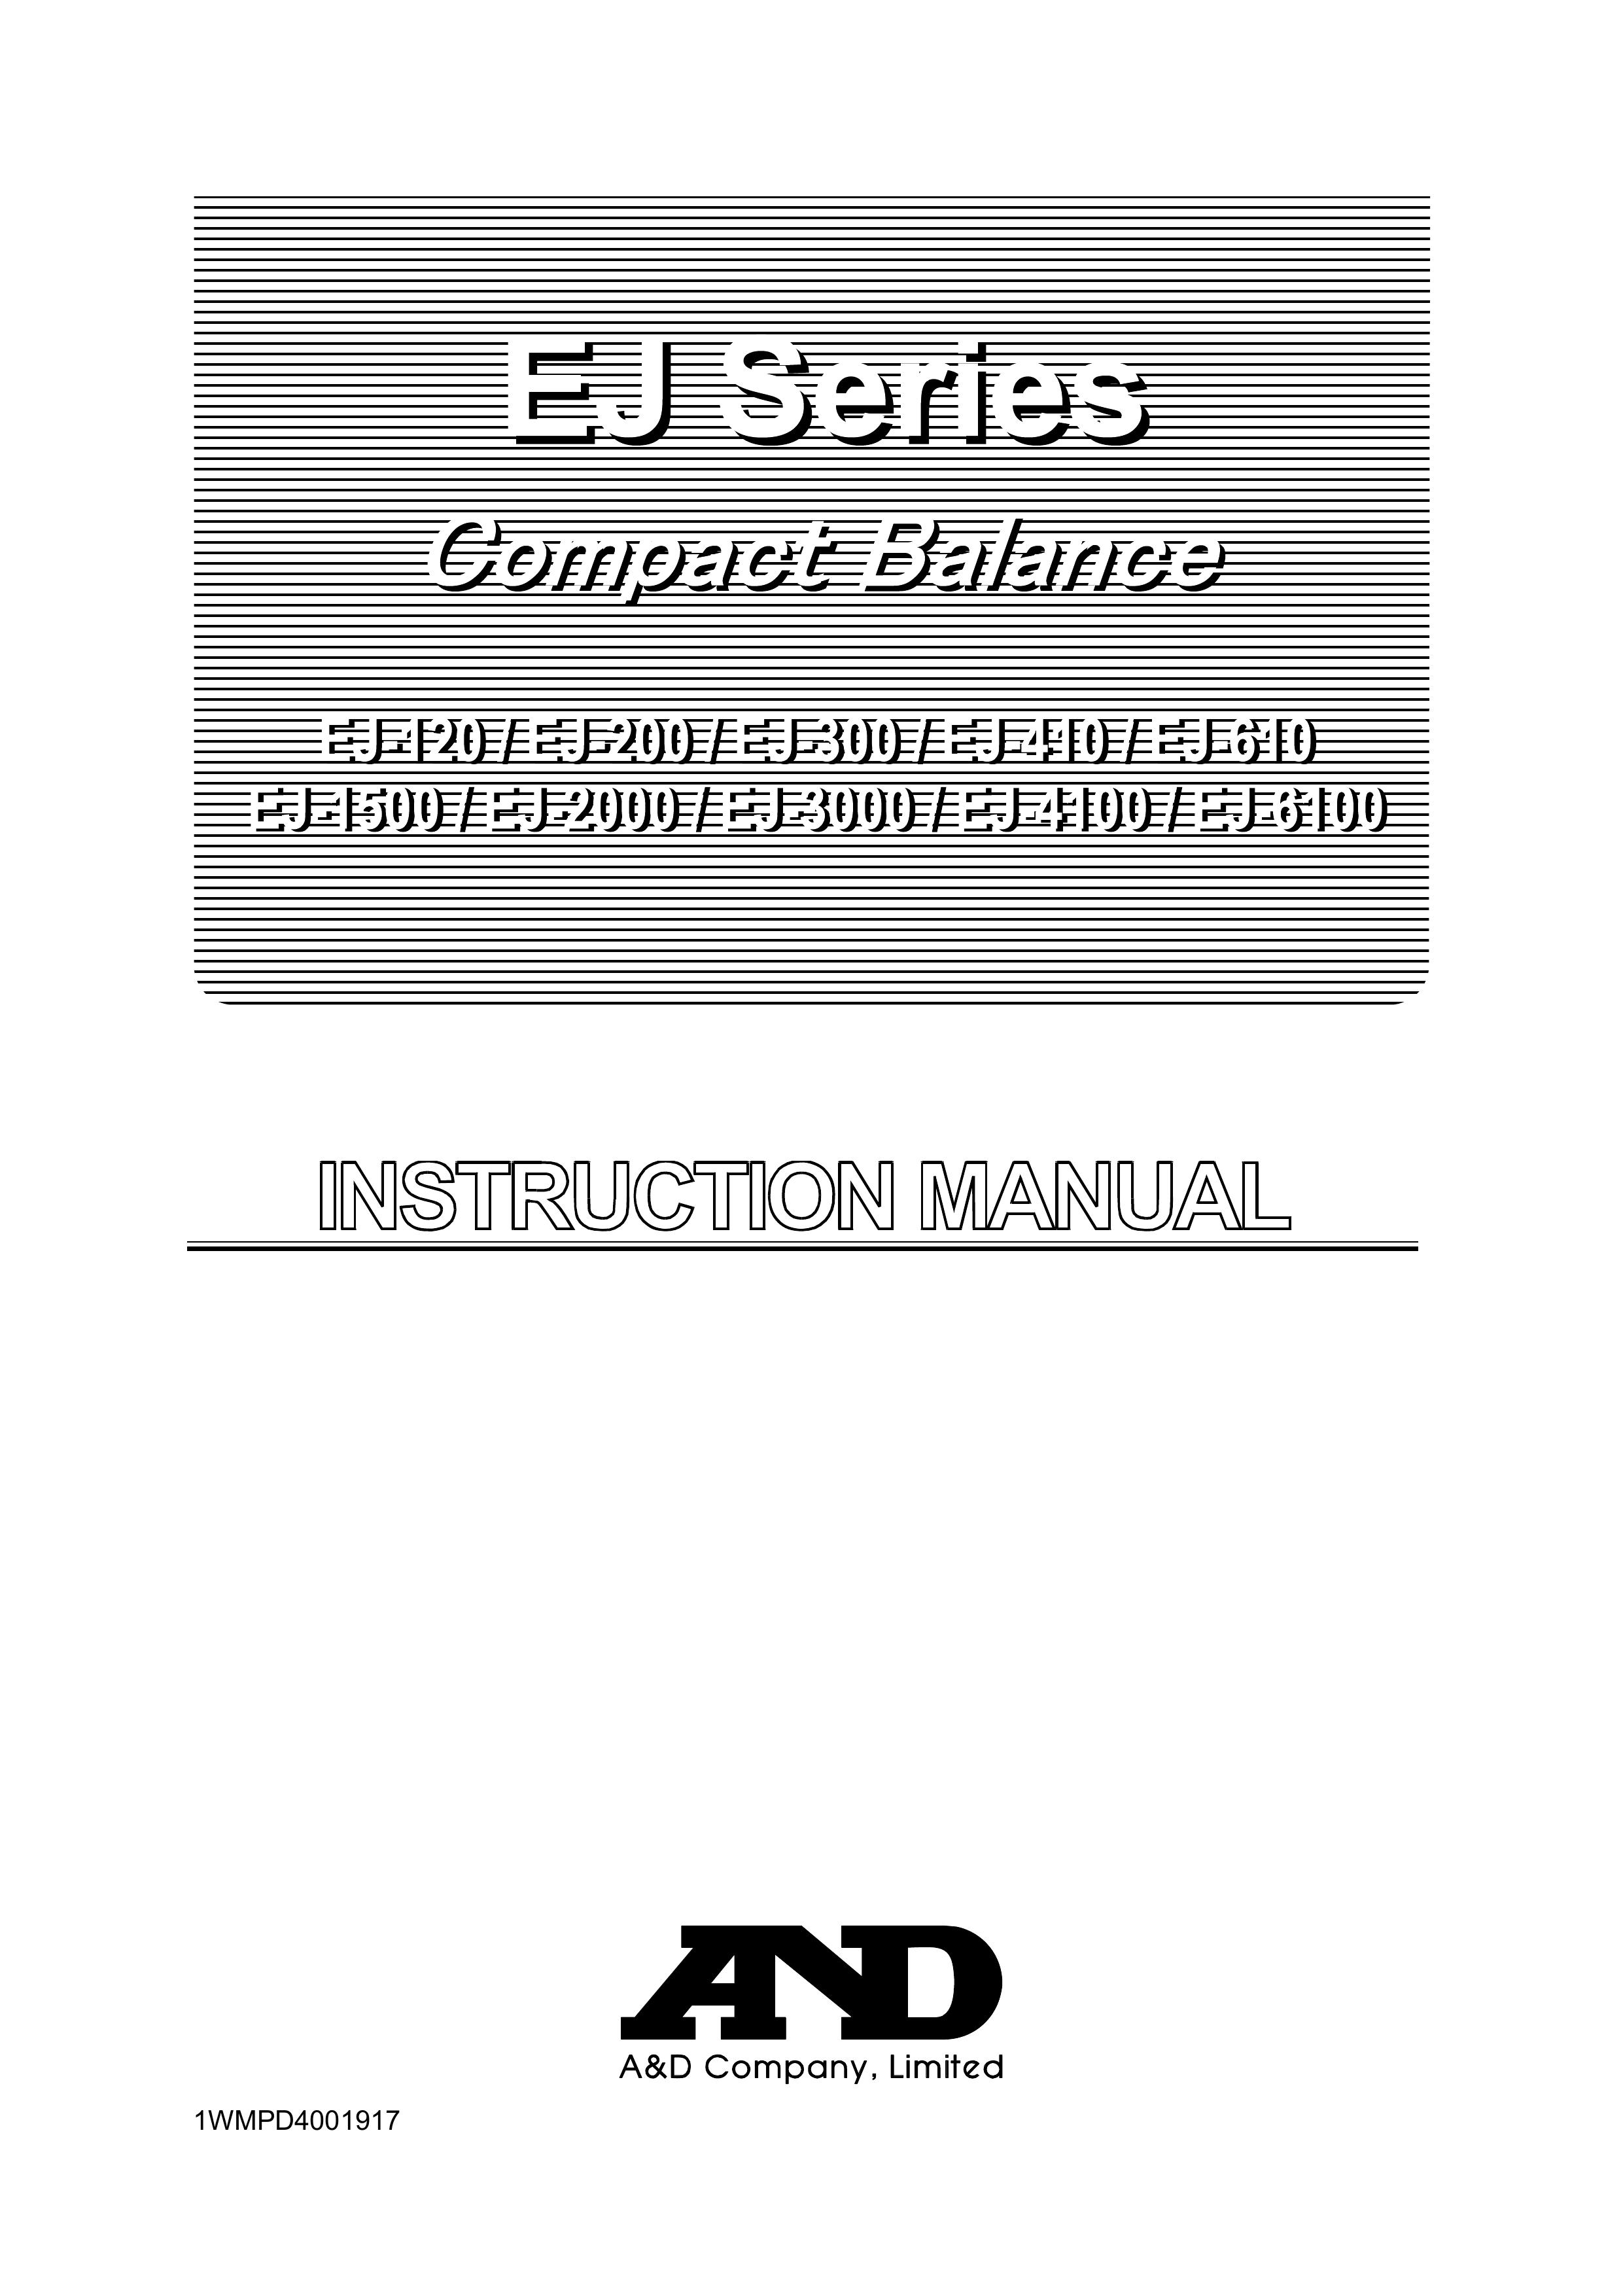 A&D EJ-440 Scale User Manual